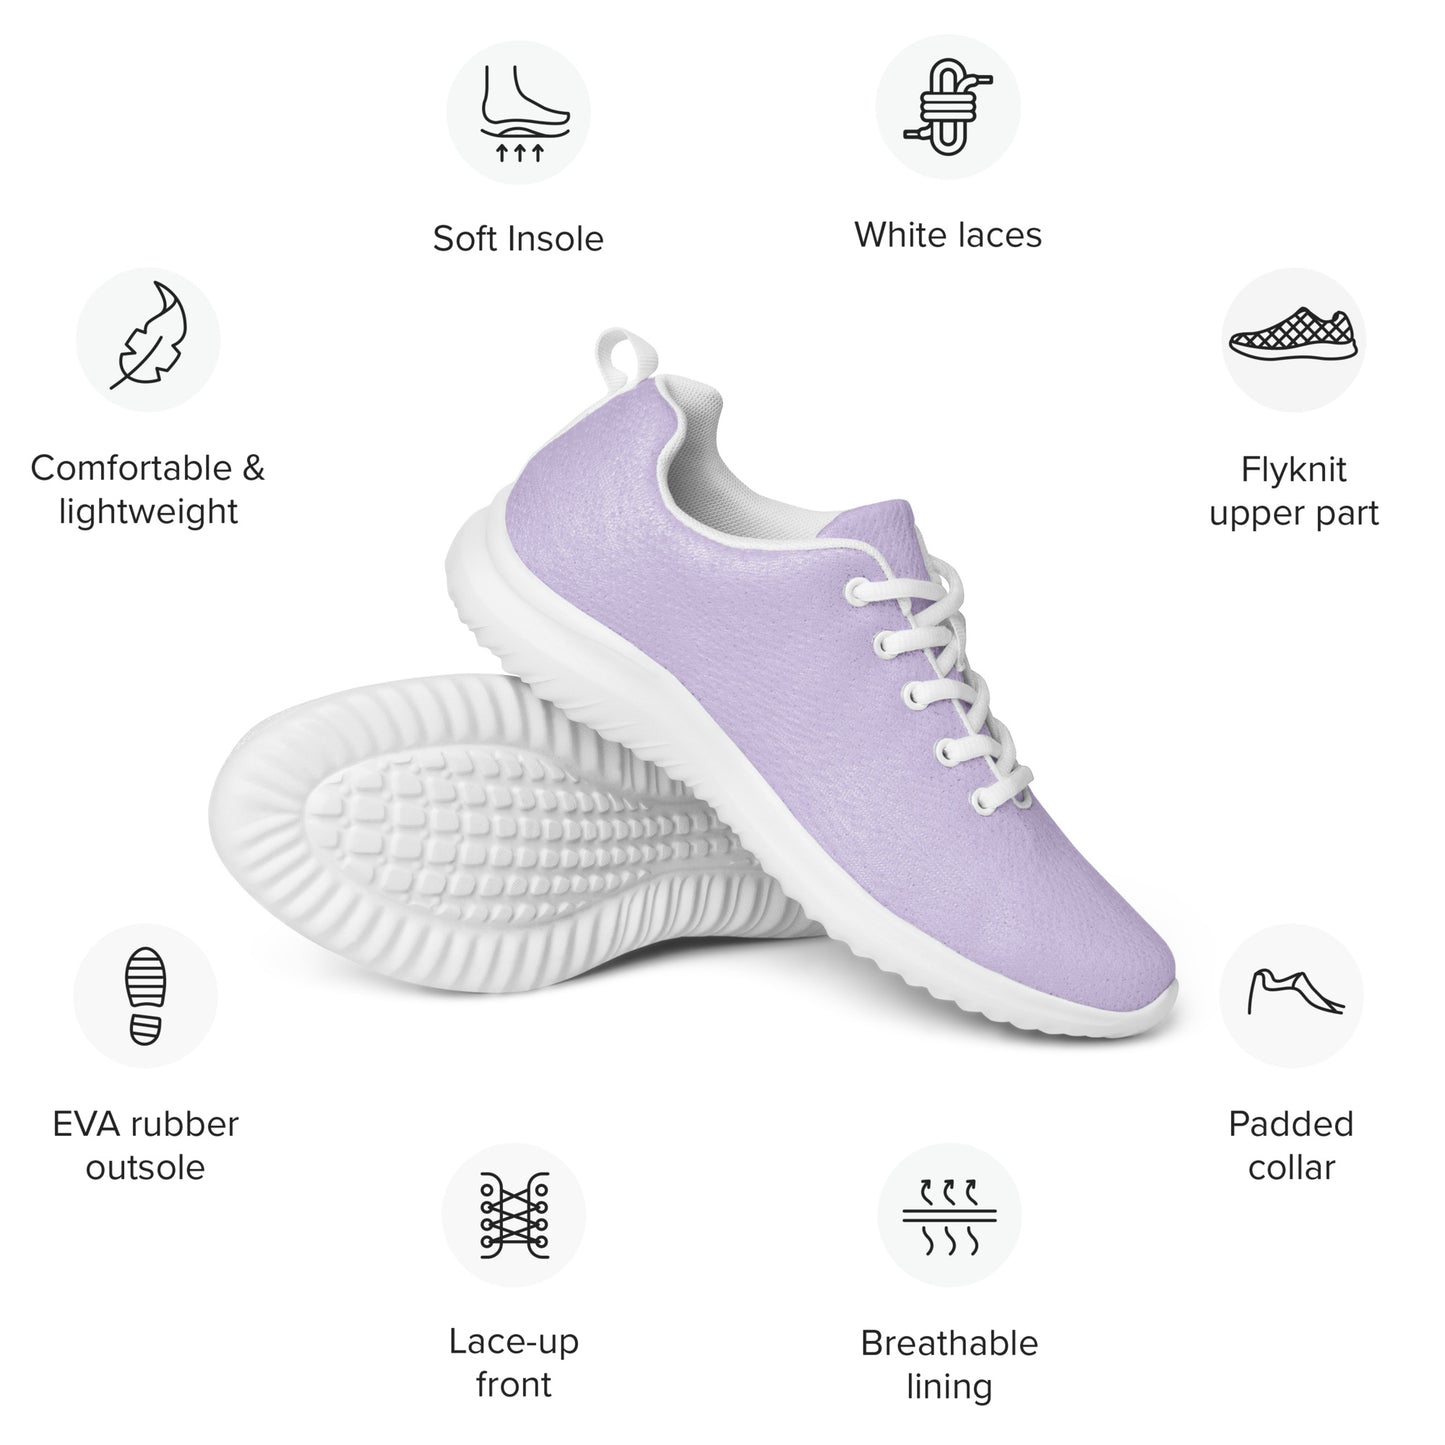 DASH Lavender Women’s Athletic Shoes Lightweight Breathable Design by IOBI Original Apparel